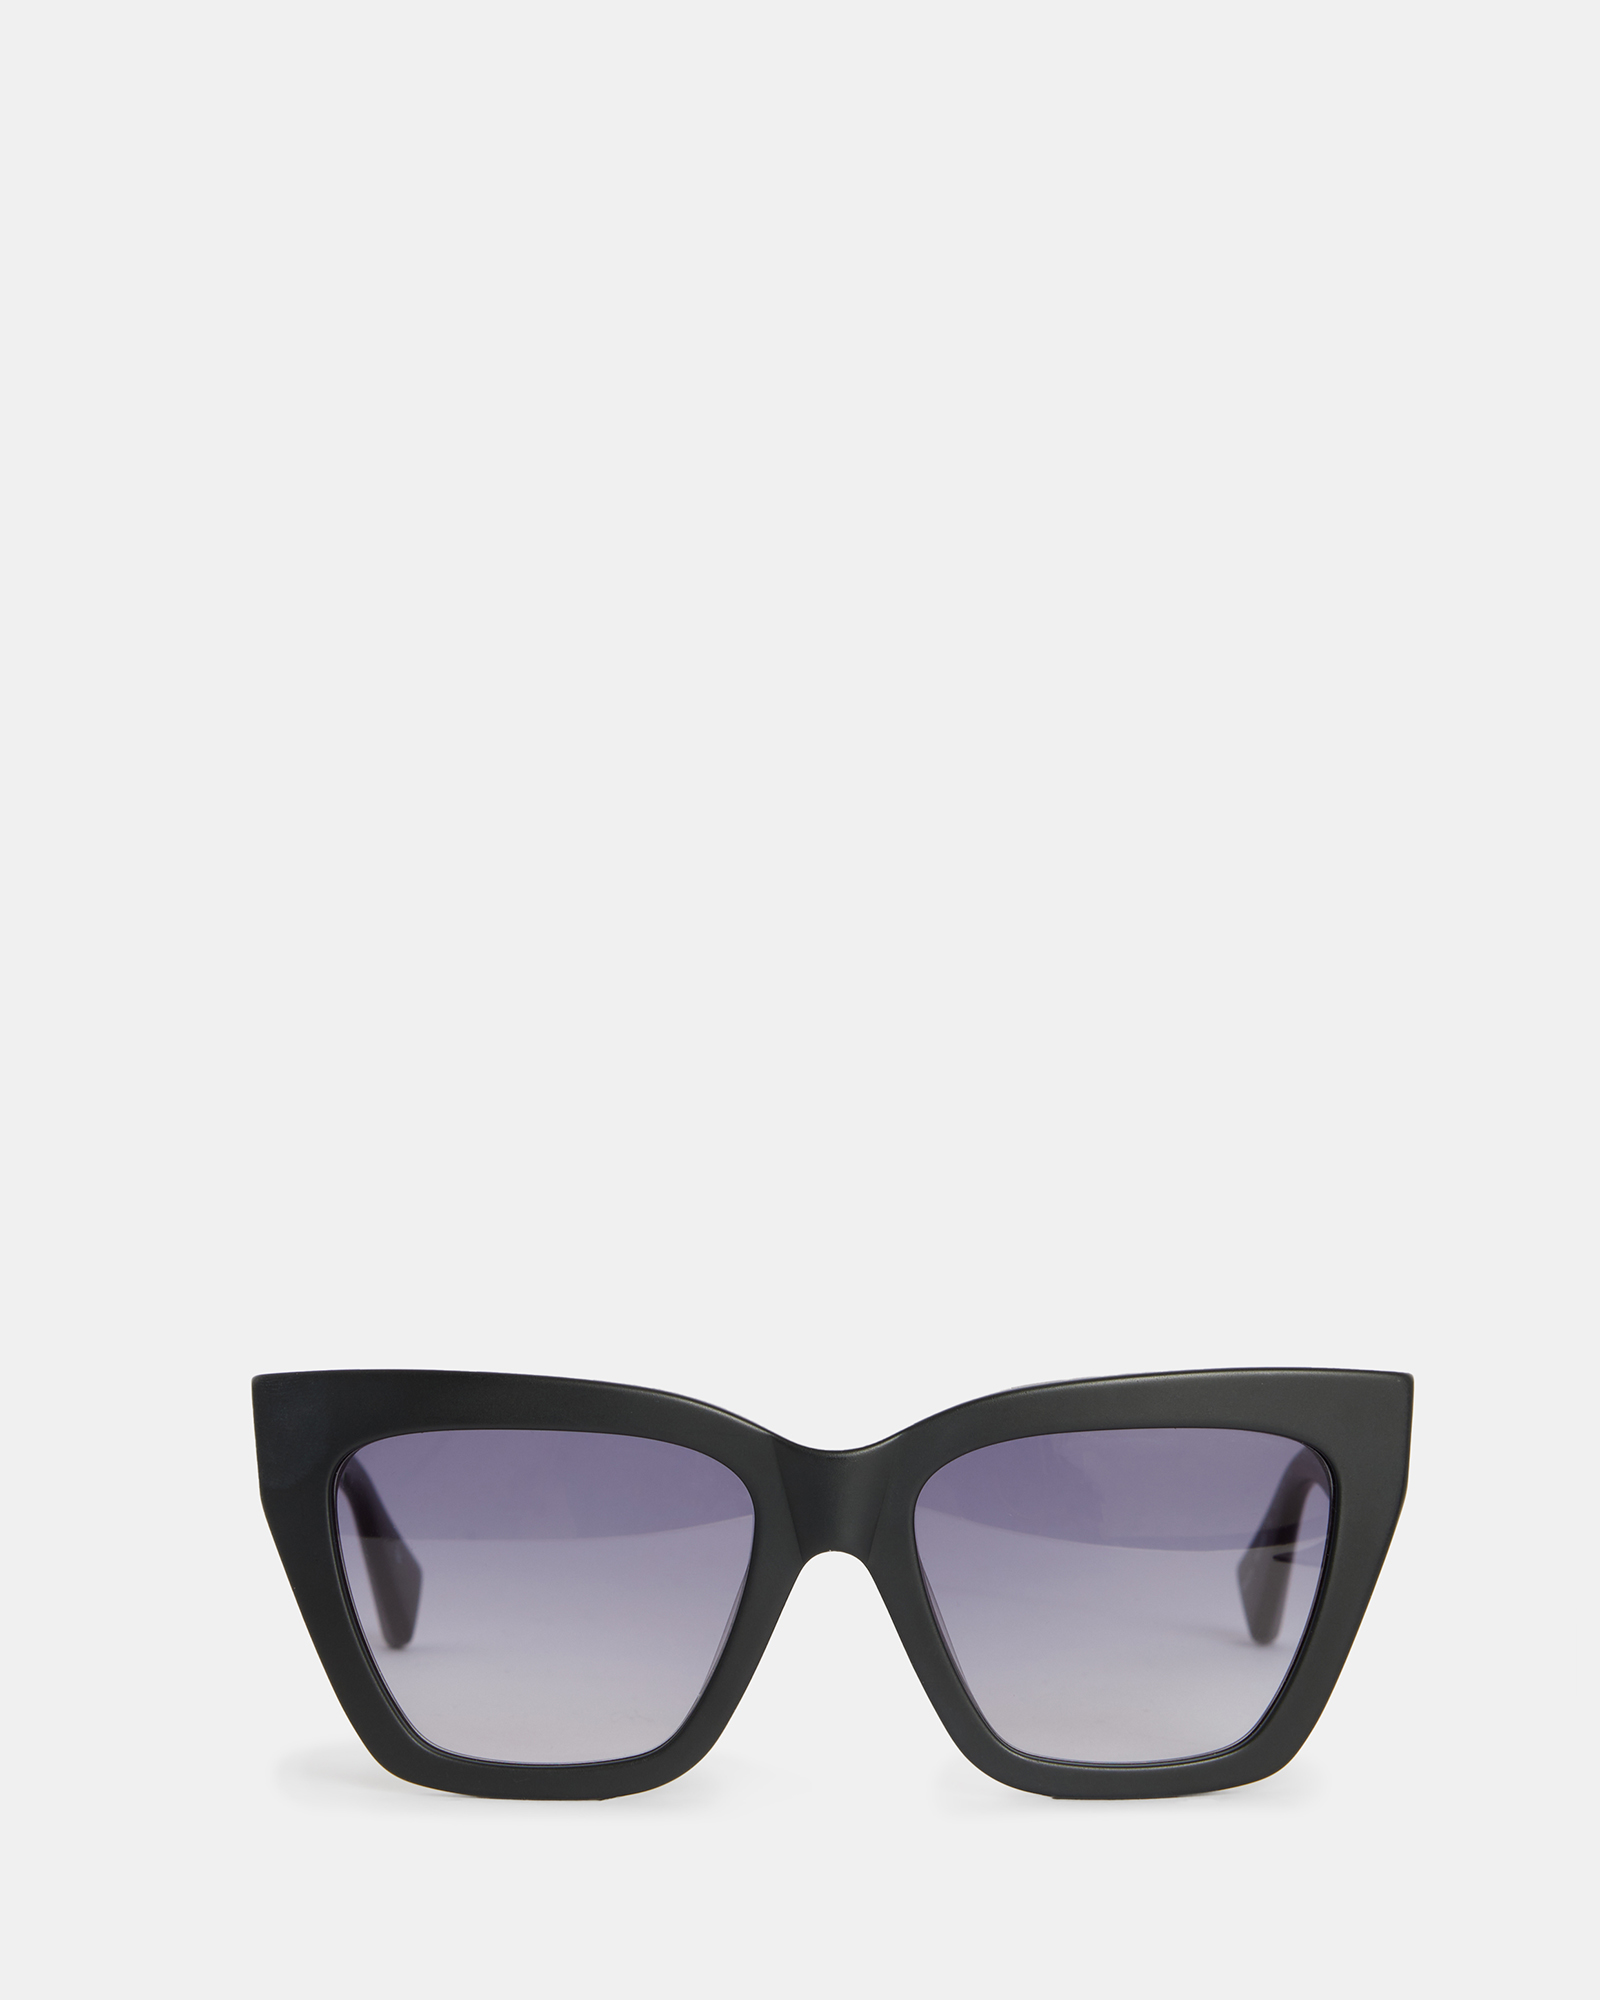 AllSaints Minerva Square Cat Eye Sunglasses,, Black